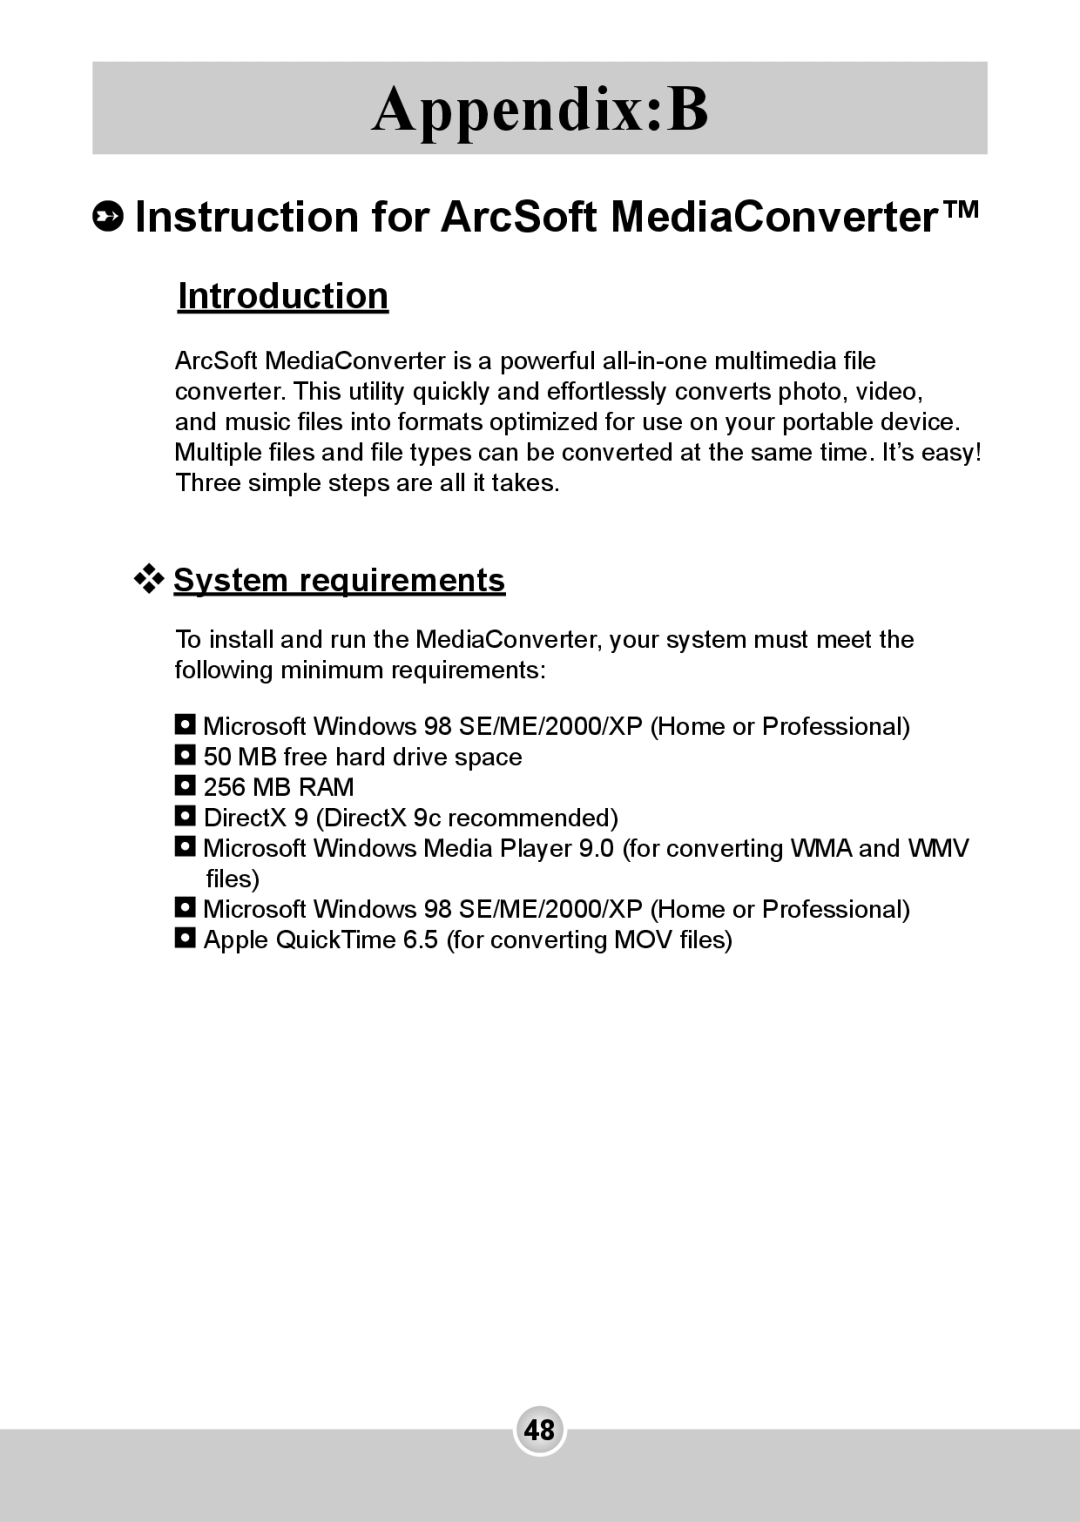 Nokia 6108 manual AppendixB, Instruction for ArcSoft MediaConverter, Introduction, System requirements 